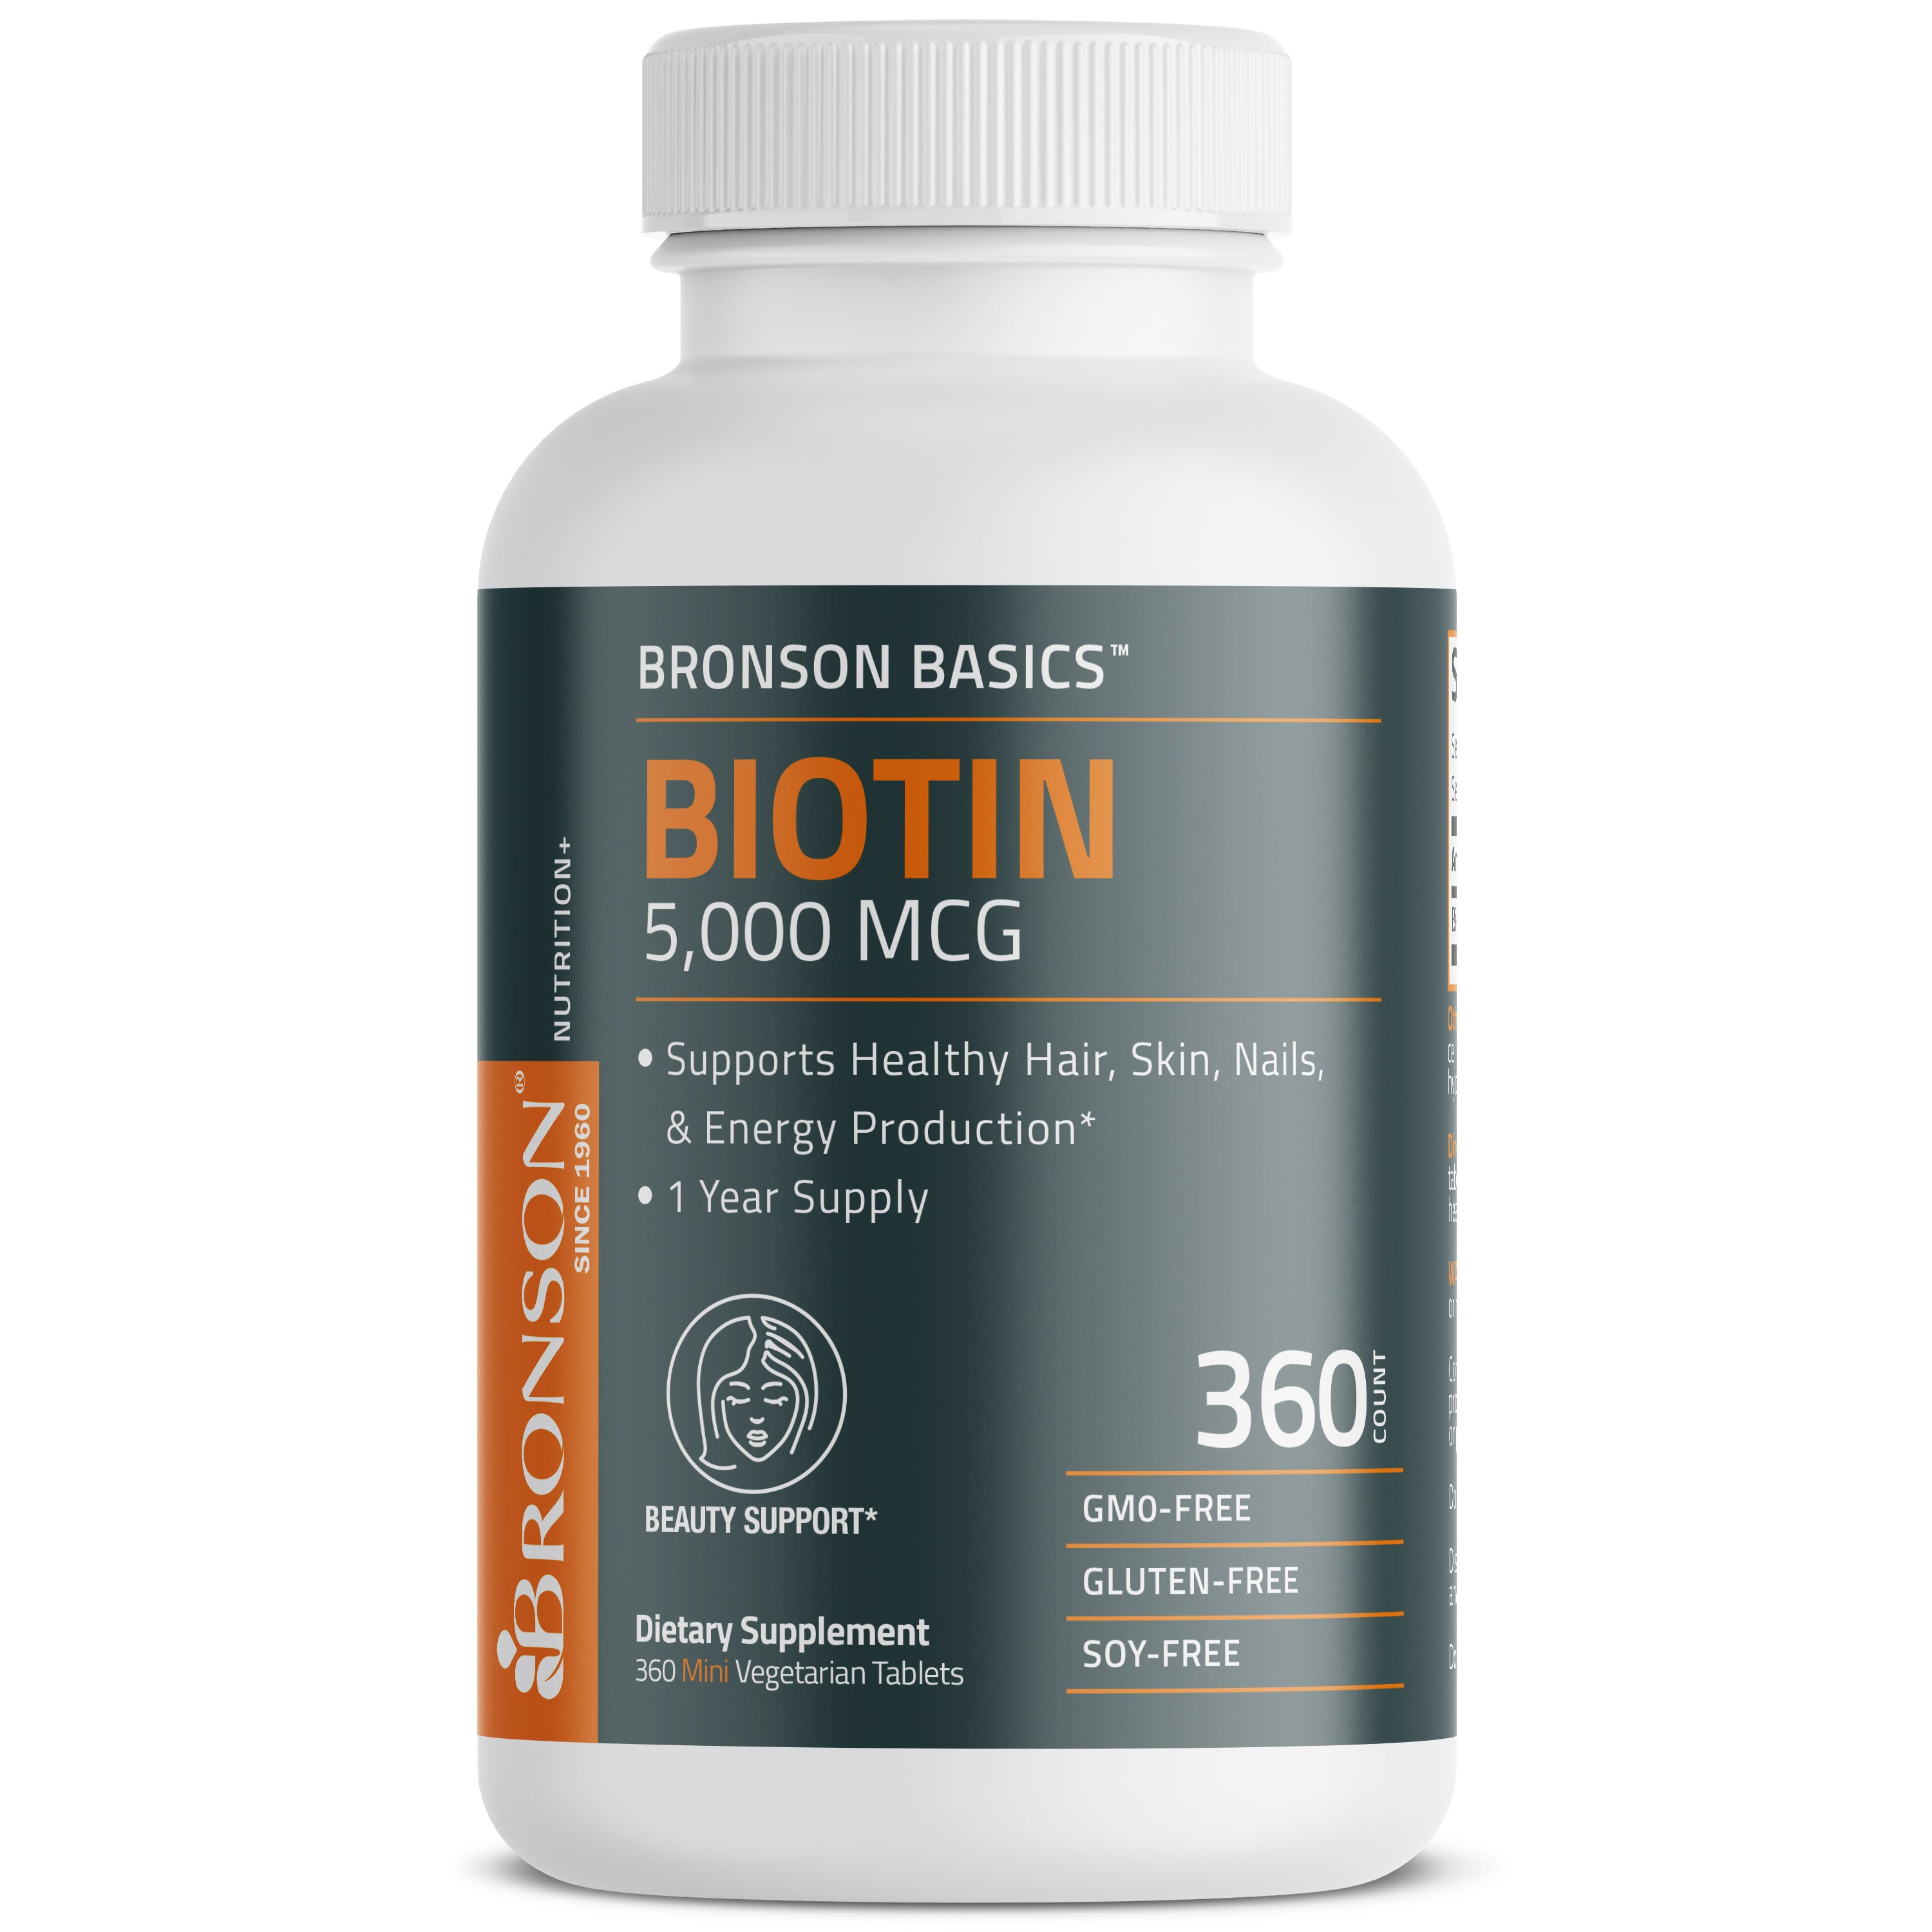 Biotin 5,000 MCG, 360 Tablets view 3 of 6